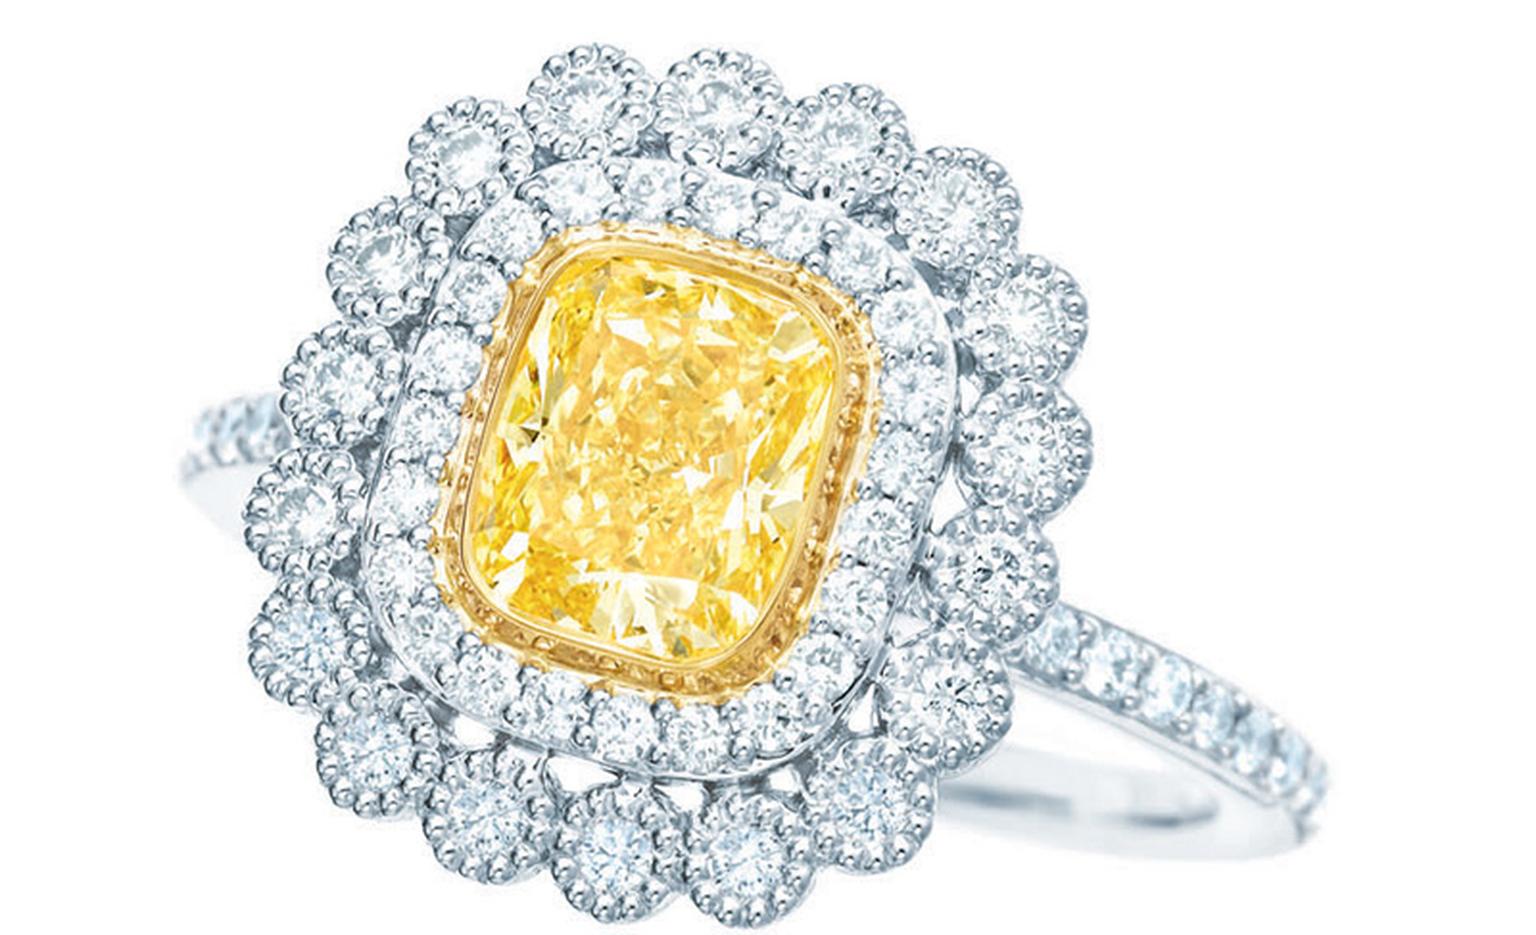 Tiffany-Enchant-yellow-and-white-diamond-rings-set-in-platinum.jpg